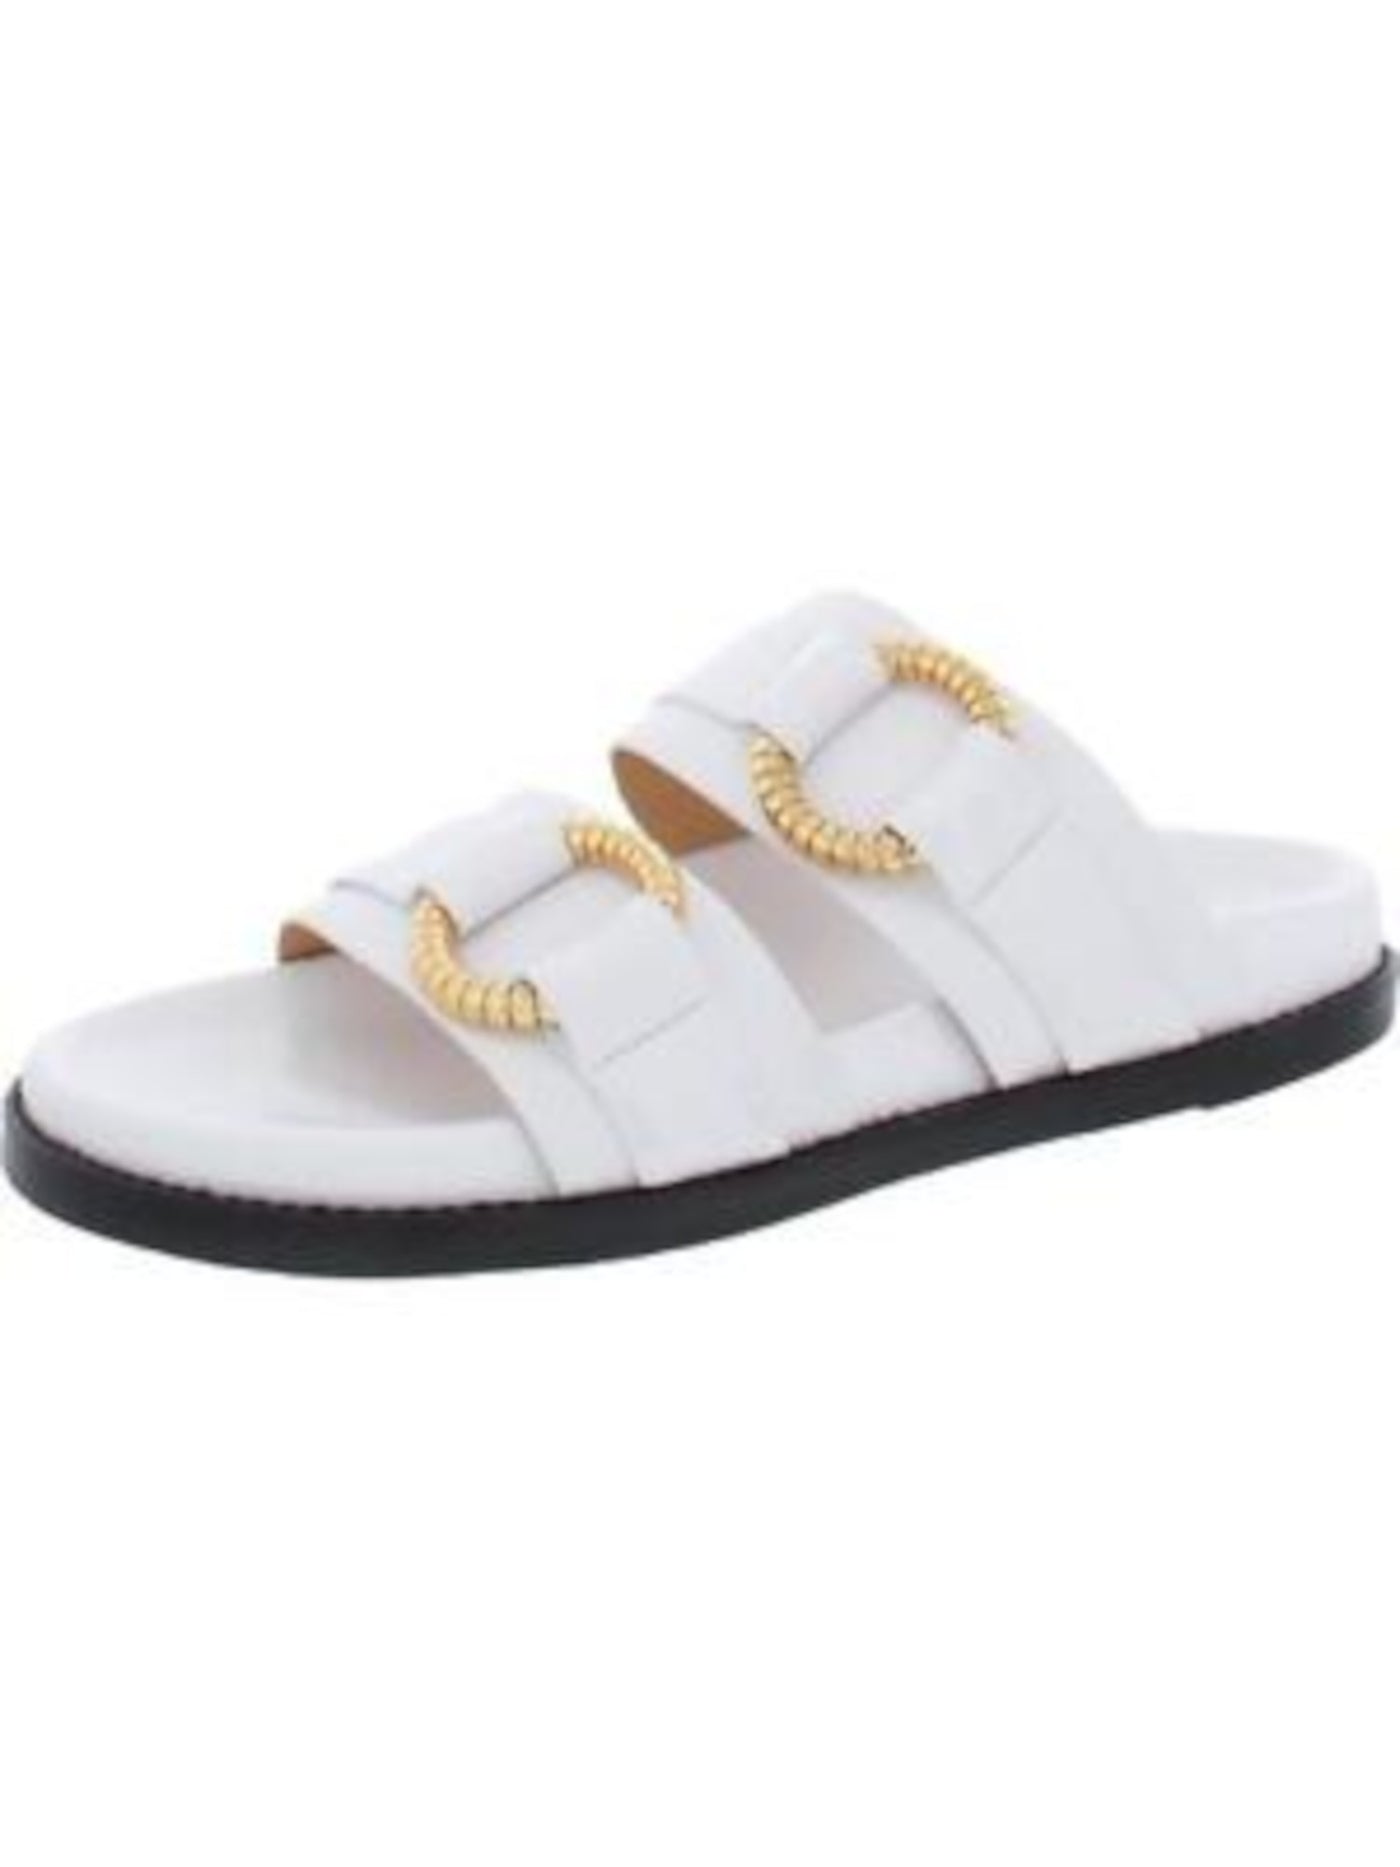 AQUA Womens White Ring Hardware Comfort Round Toe Platform Slip On Leather Slide Sandals Shoes 8 B